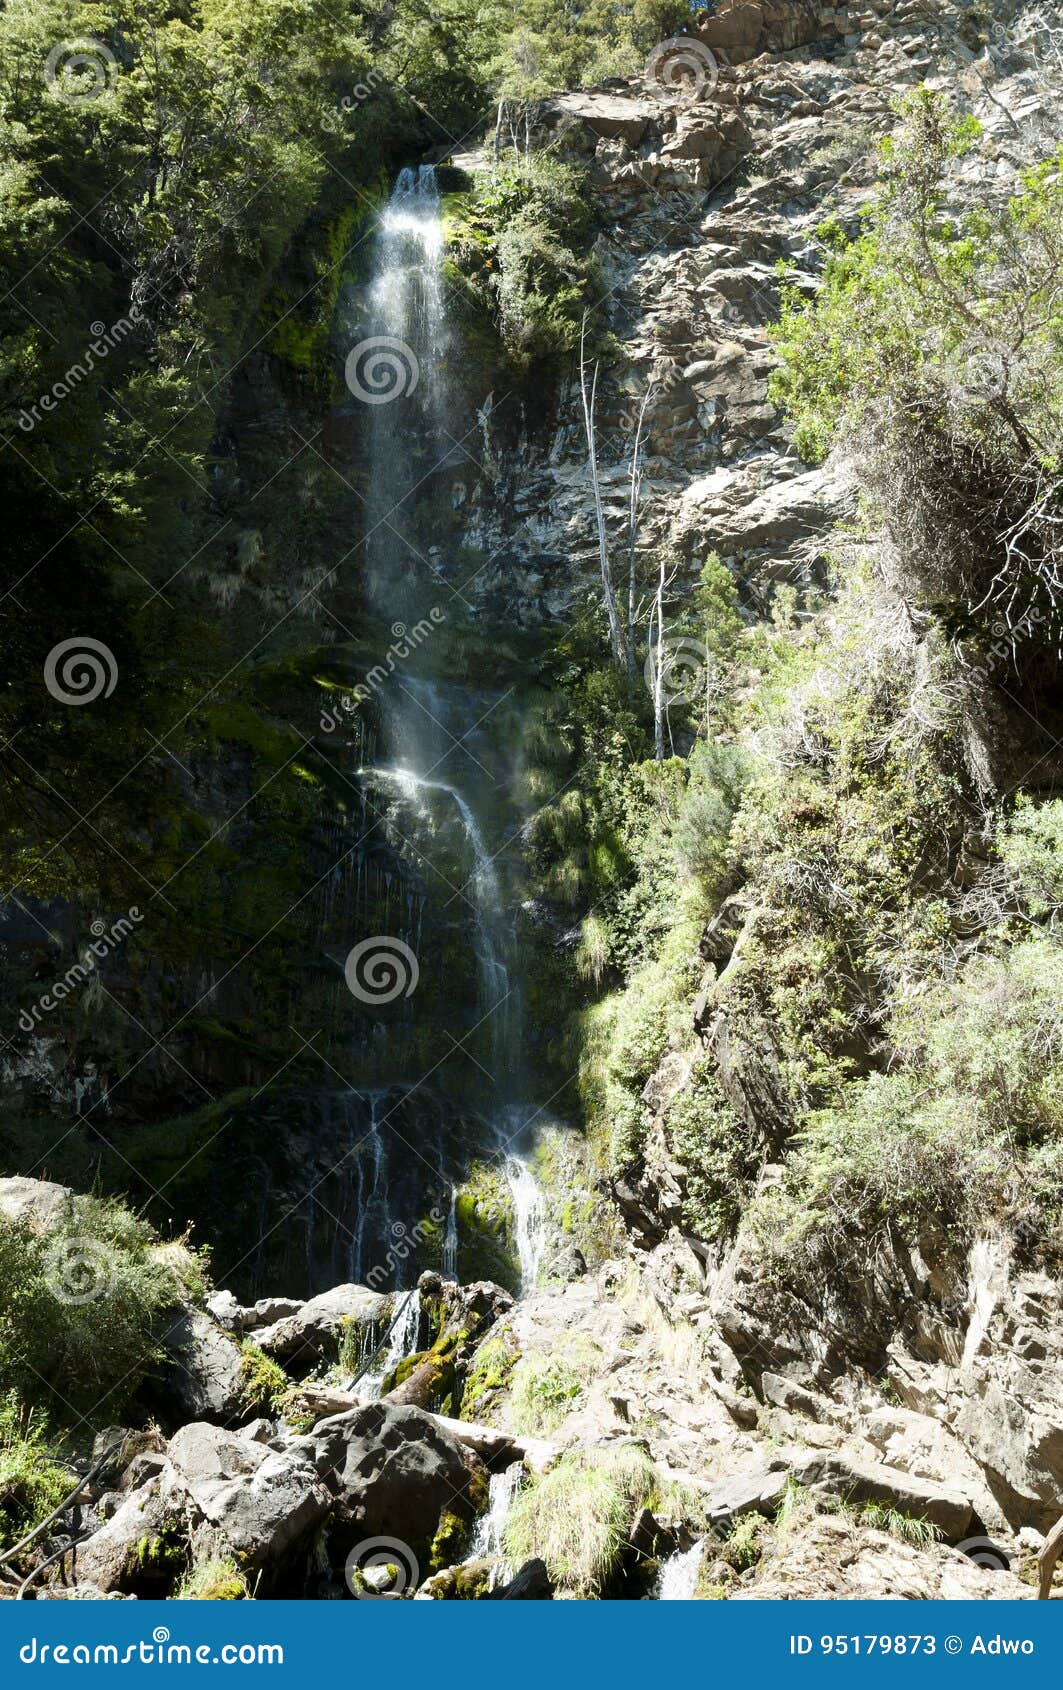 waterfall of the virgin - el bolson - argentina